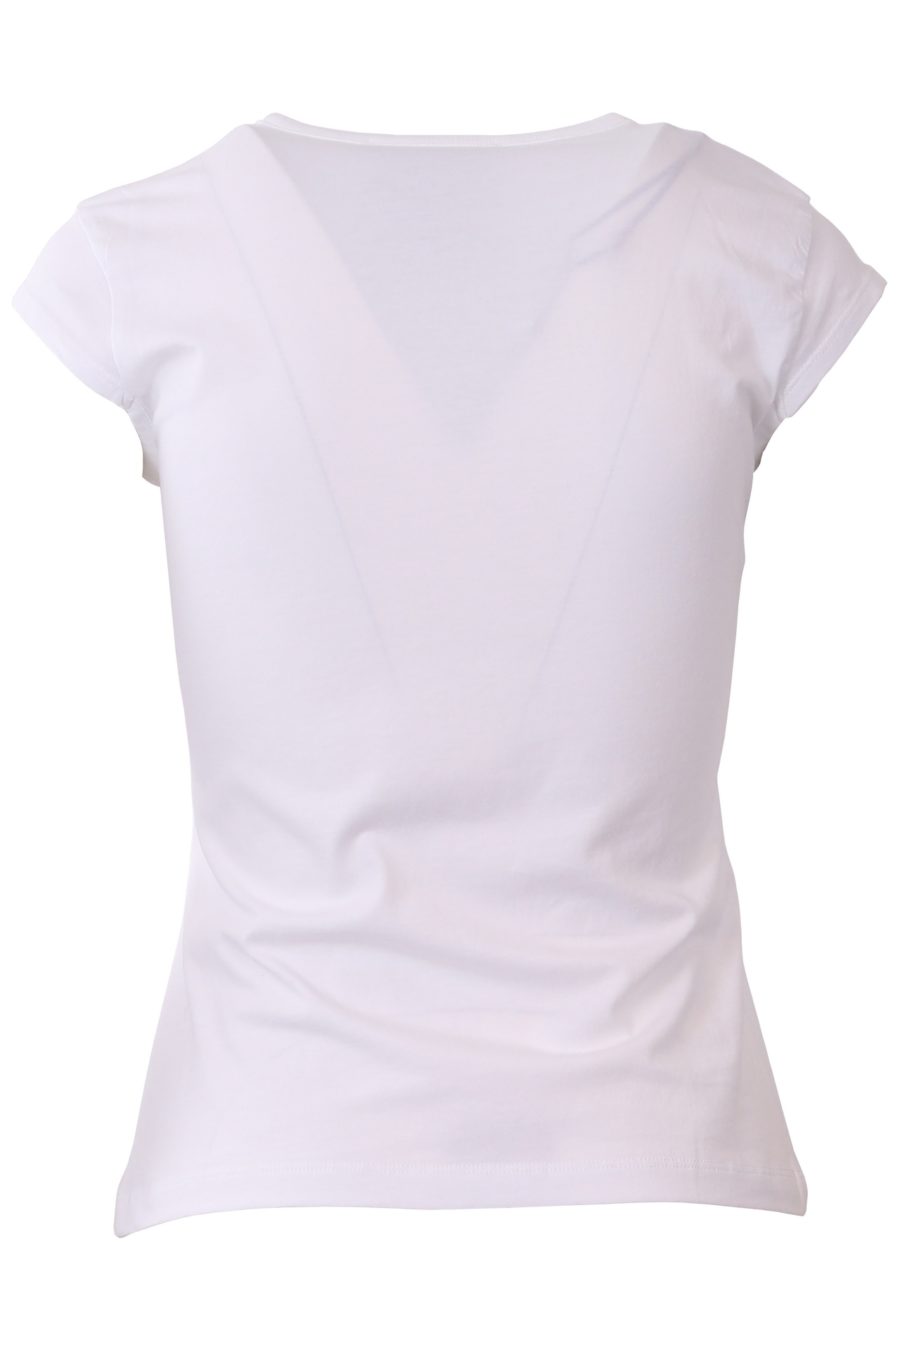 Moschino Couture weißes T-Shirt mit italienischem Bär - cb6df7e9e6bcd90dbfb0ca36e76dcefd699a5030